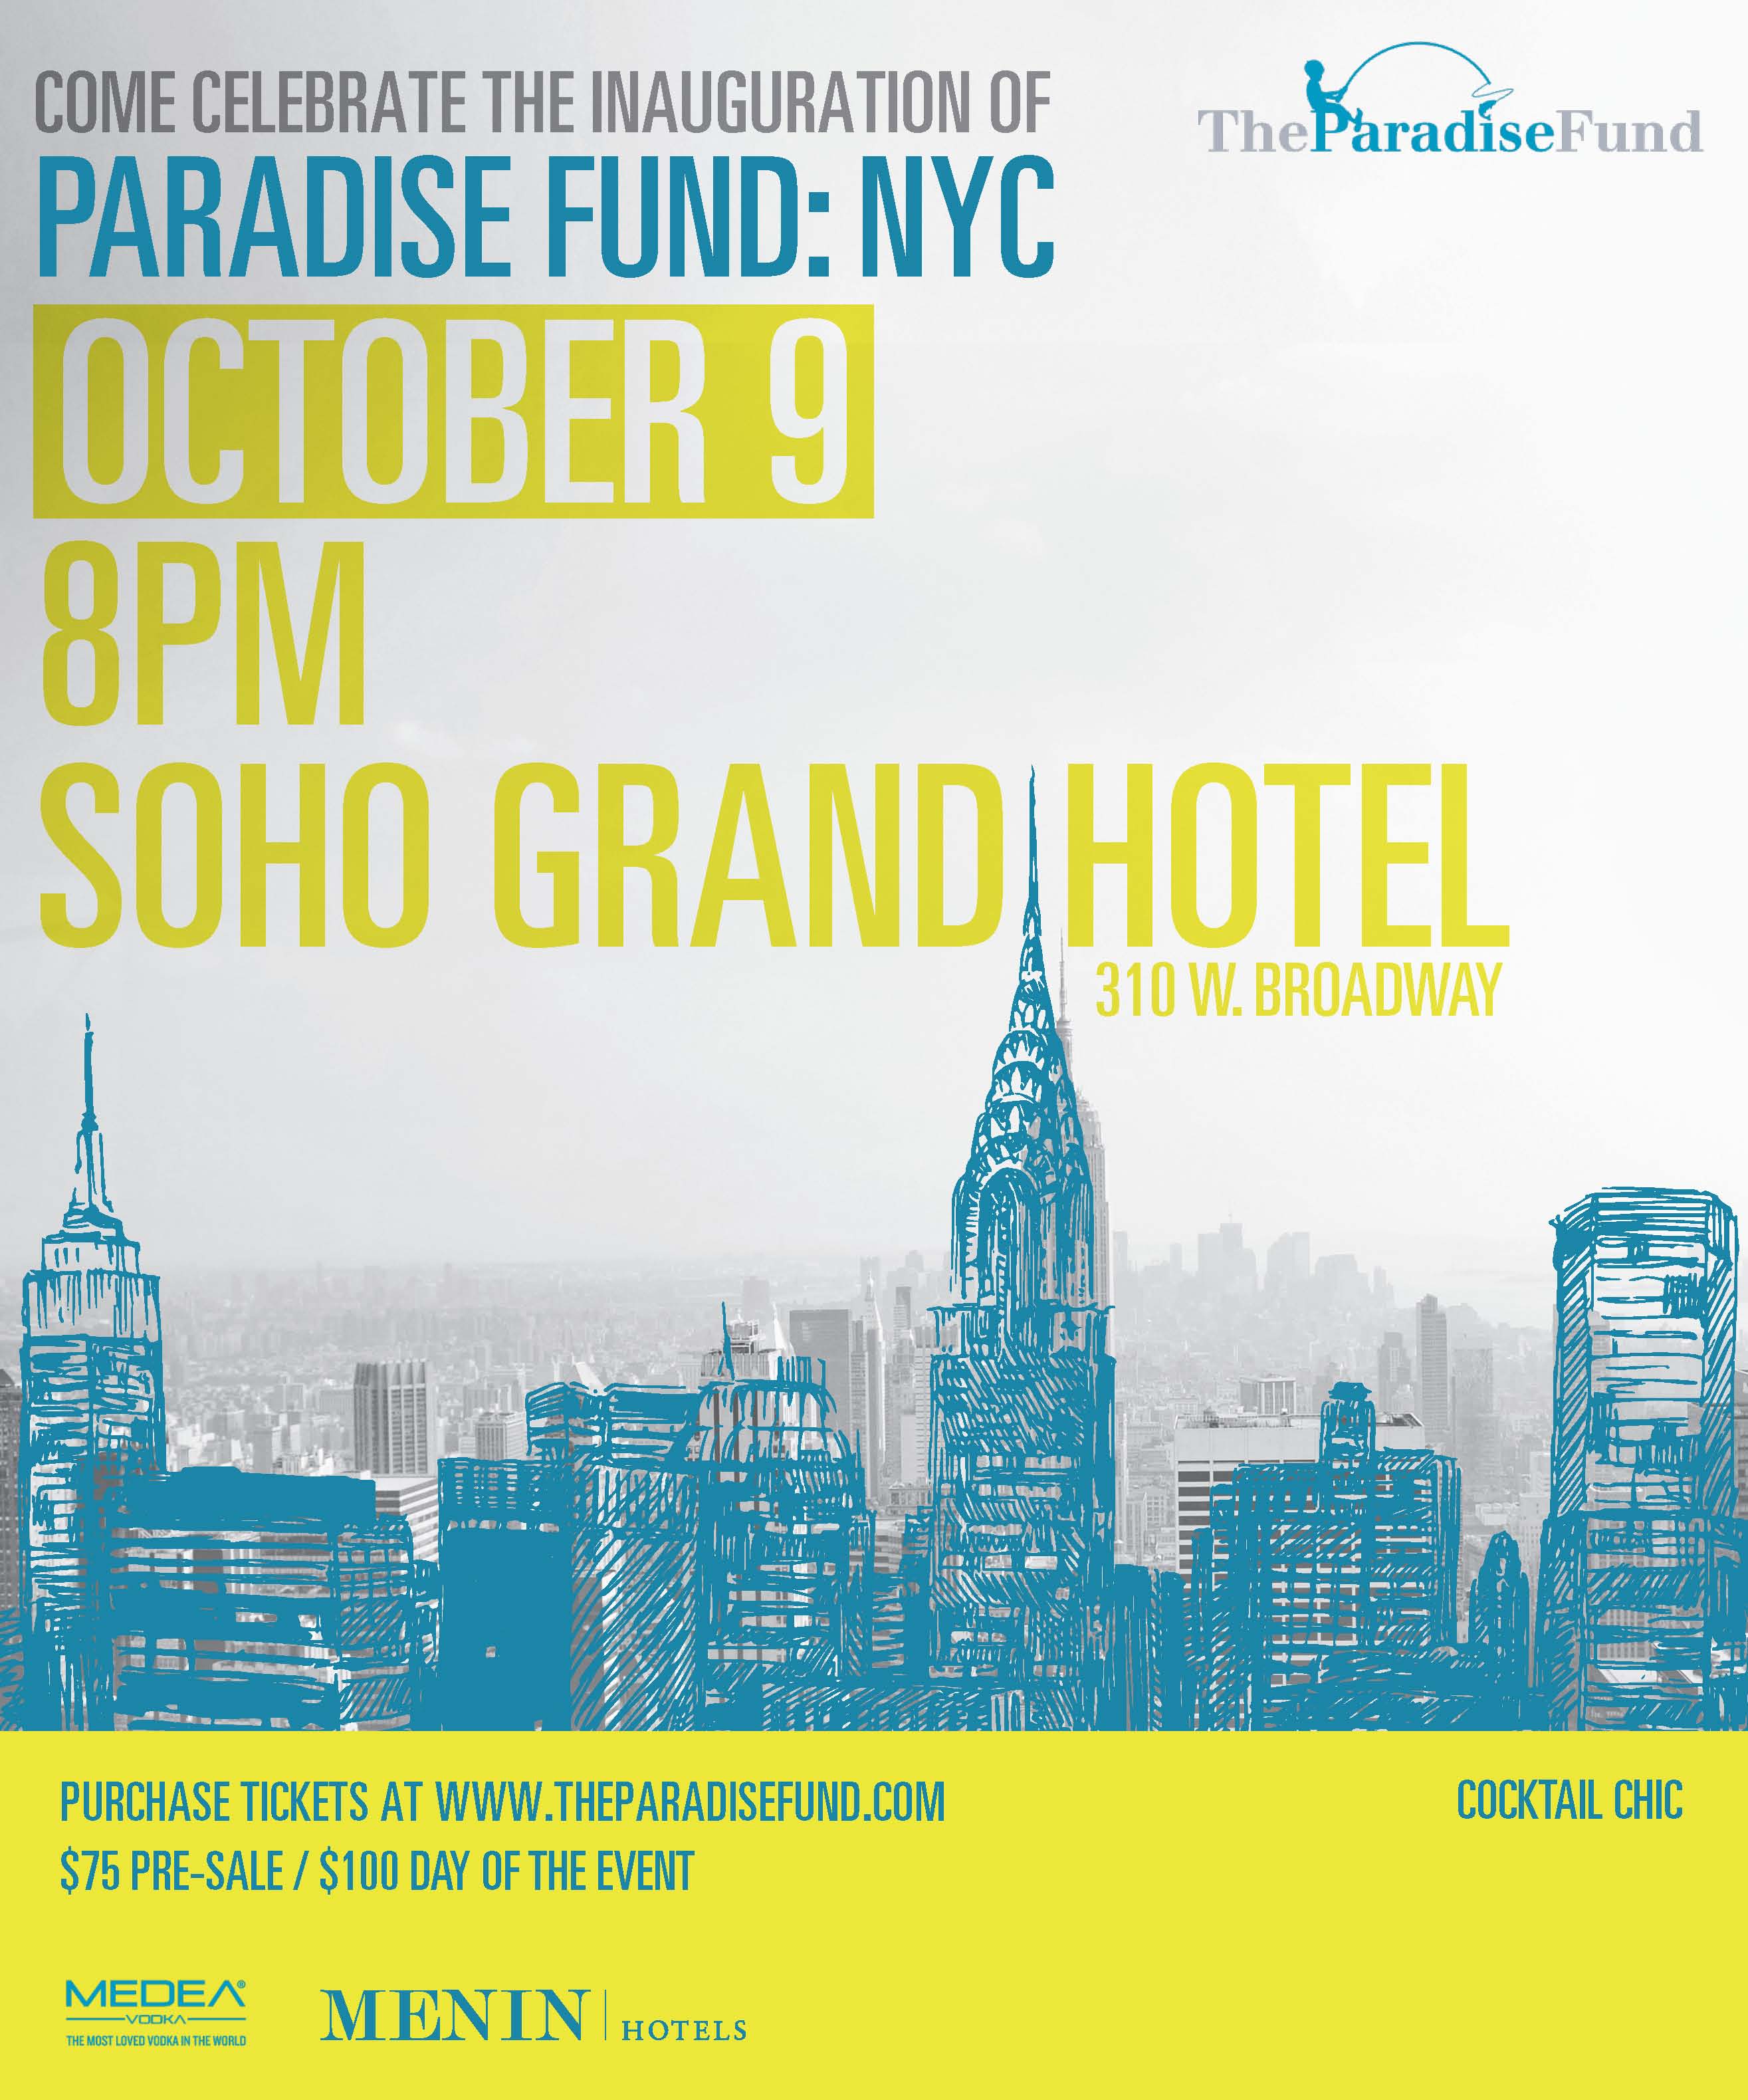 Paradis Fund - NYC Launch Invite 